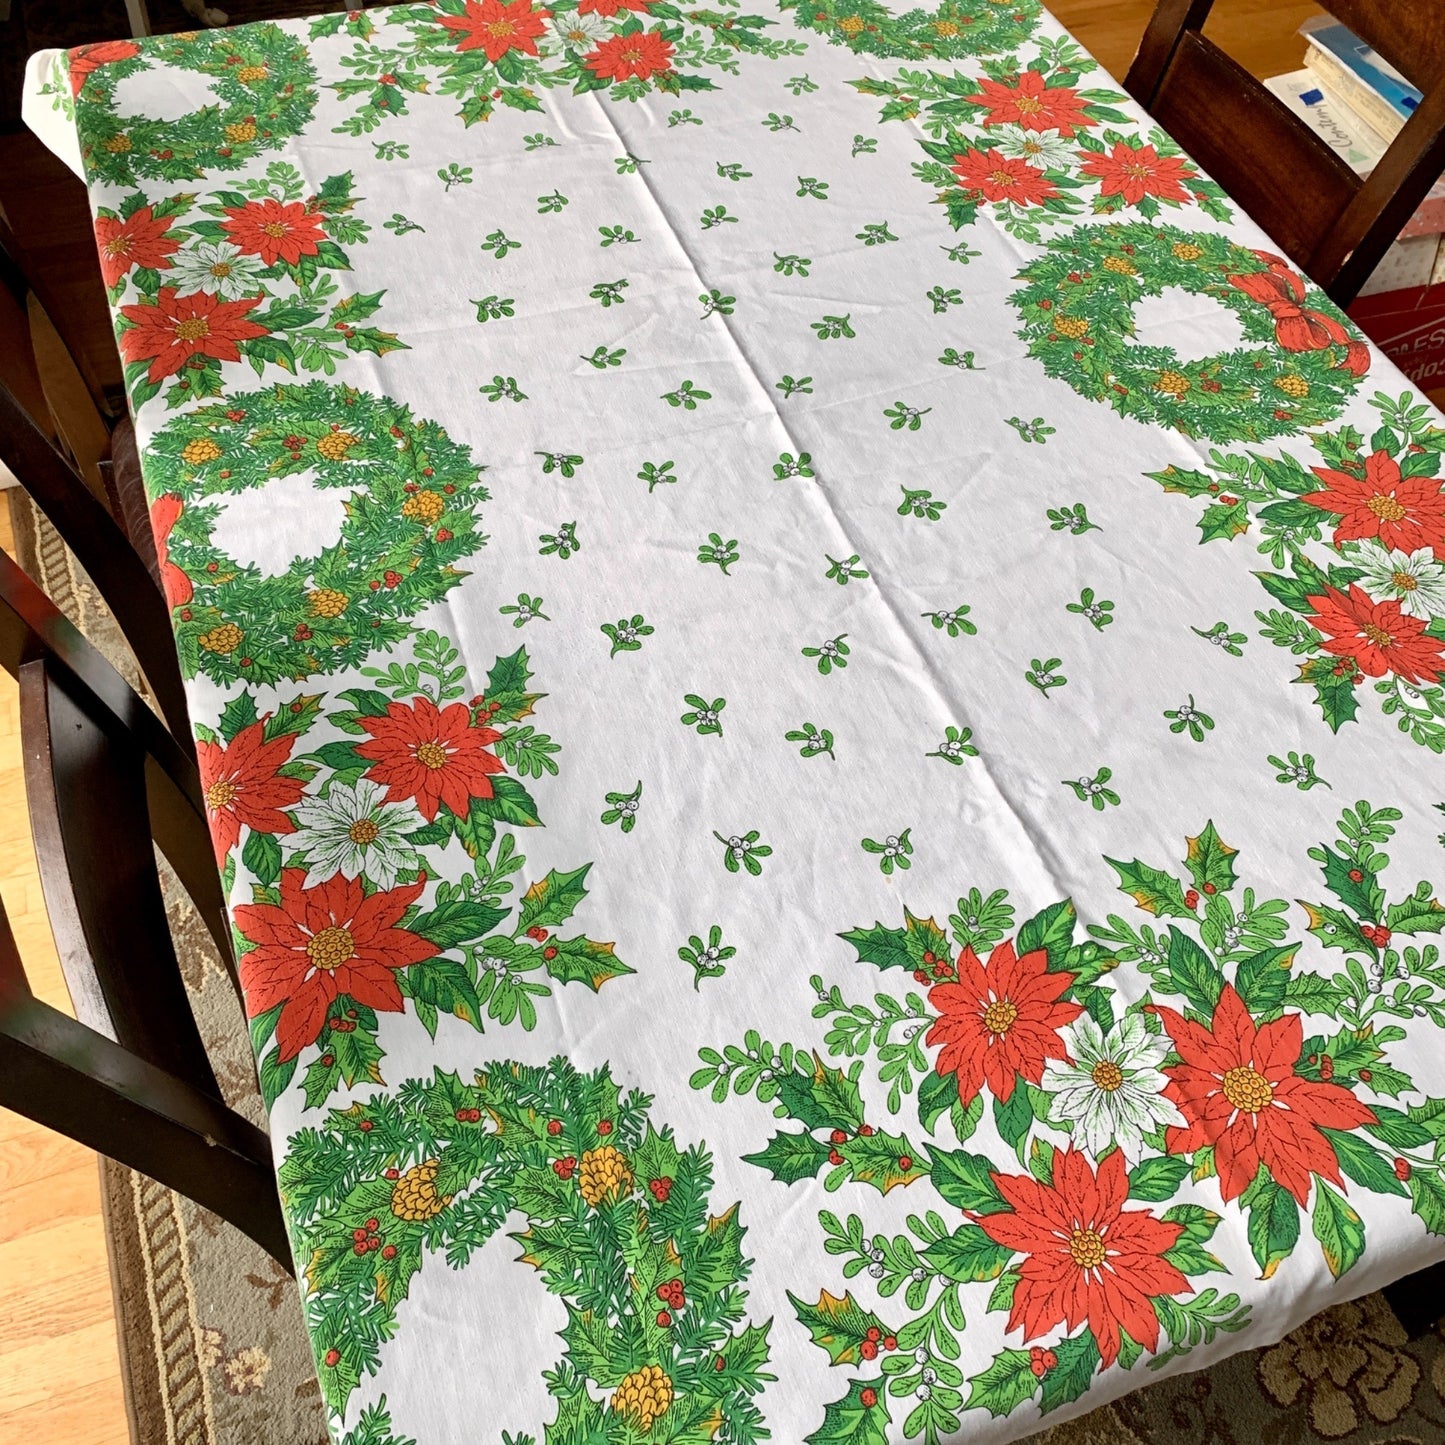 Vintage Ryan 1970s Christmas Tablecloth 64 x 49" Wreath Pointsettias